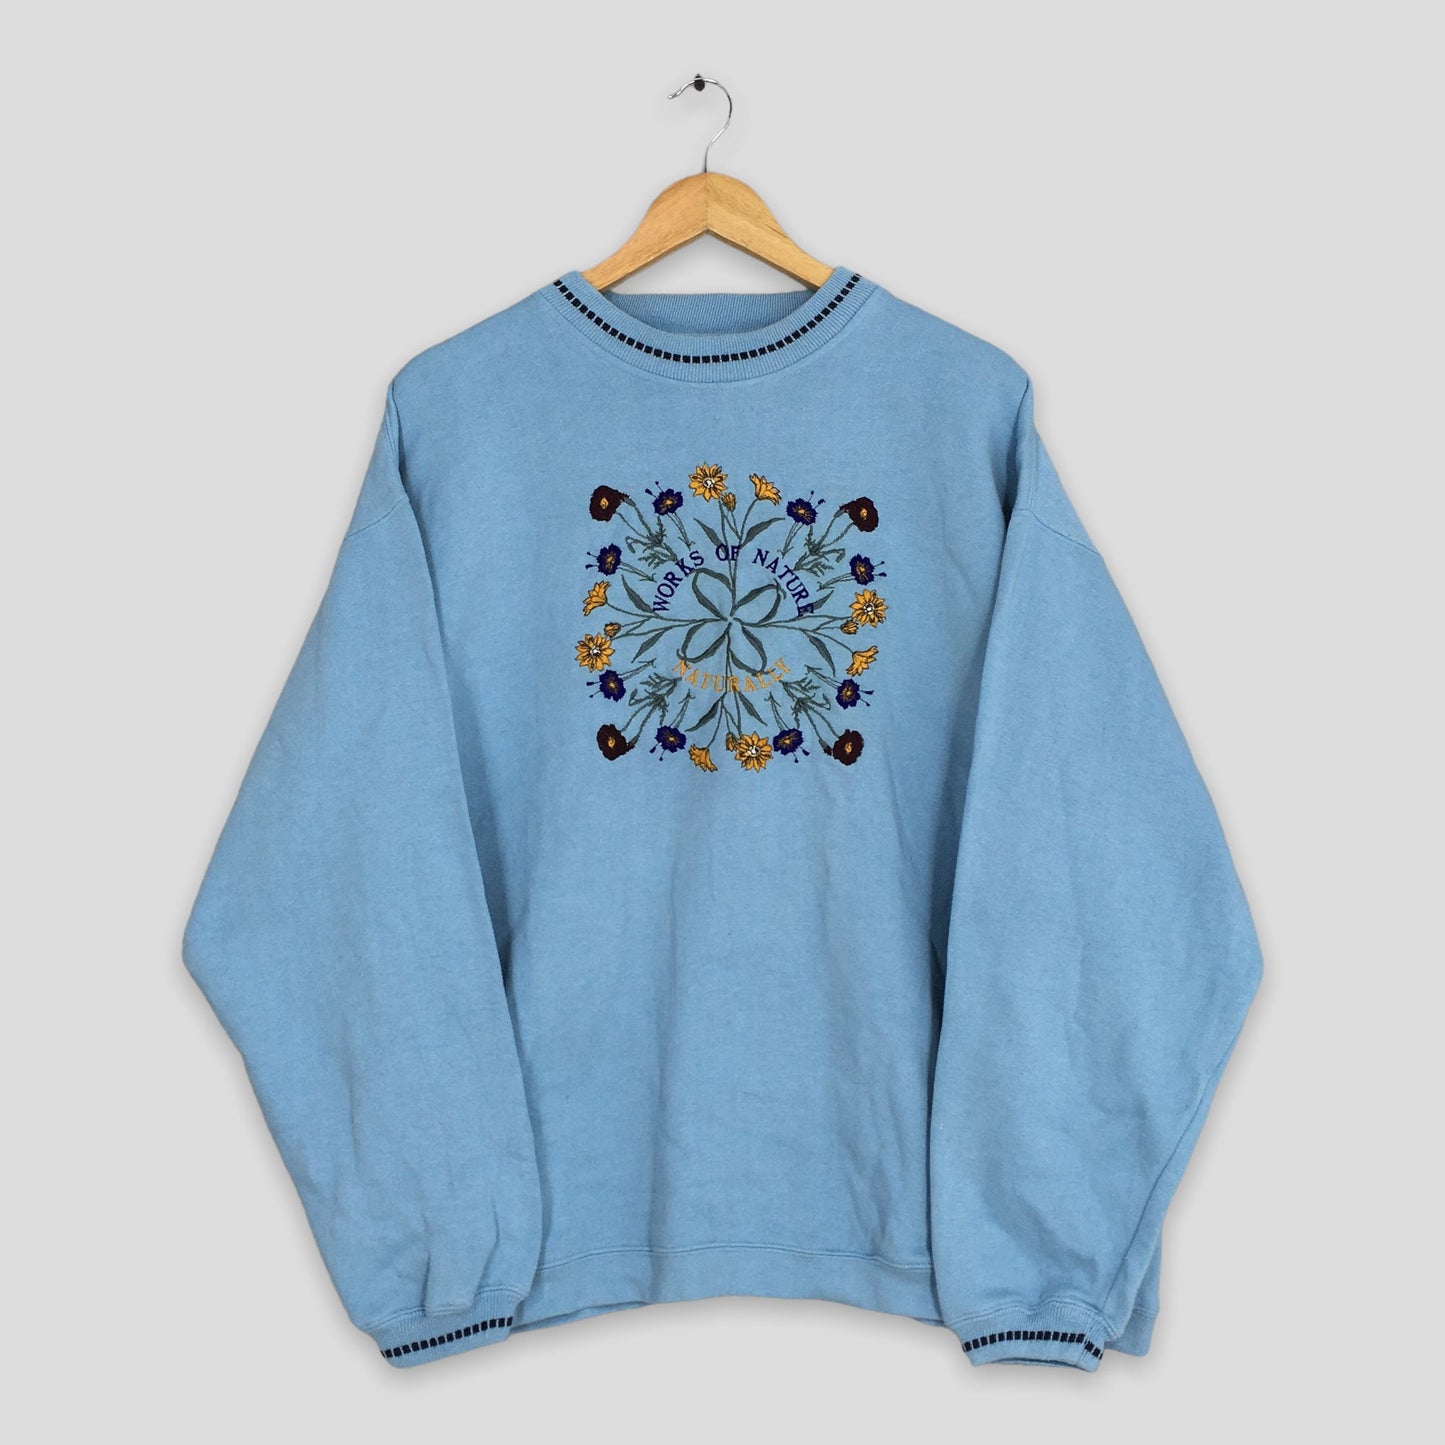 Flower Floral Embroidered Sweatshirt XLarge